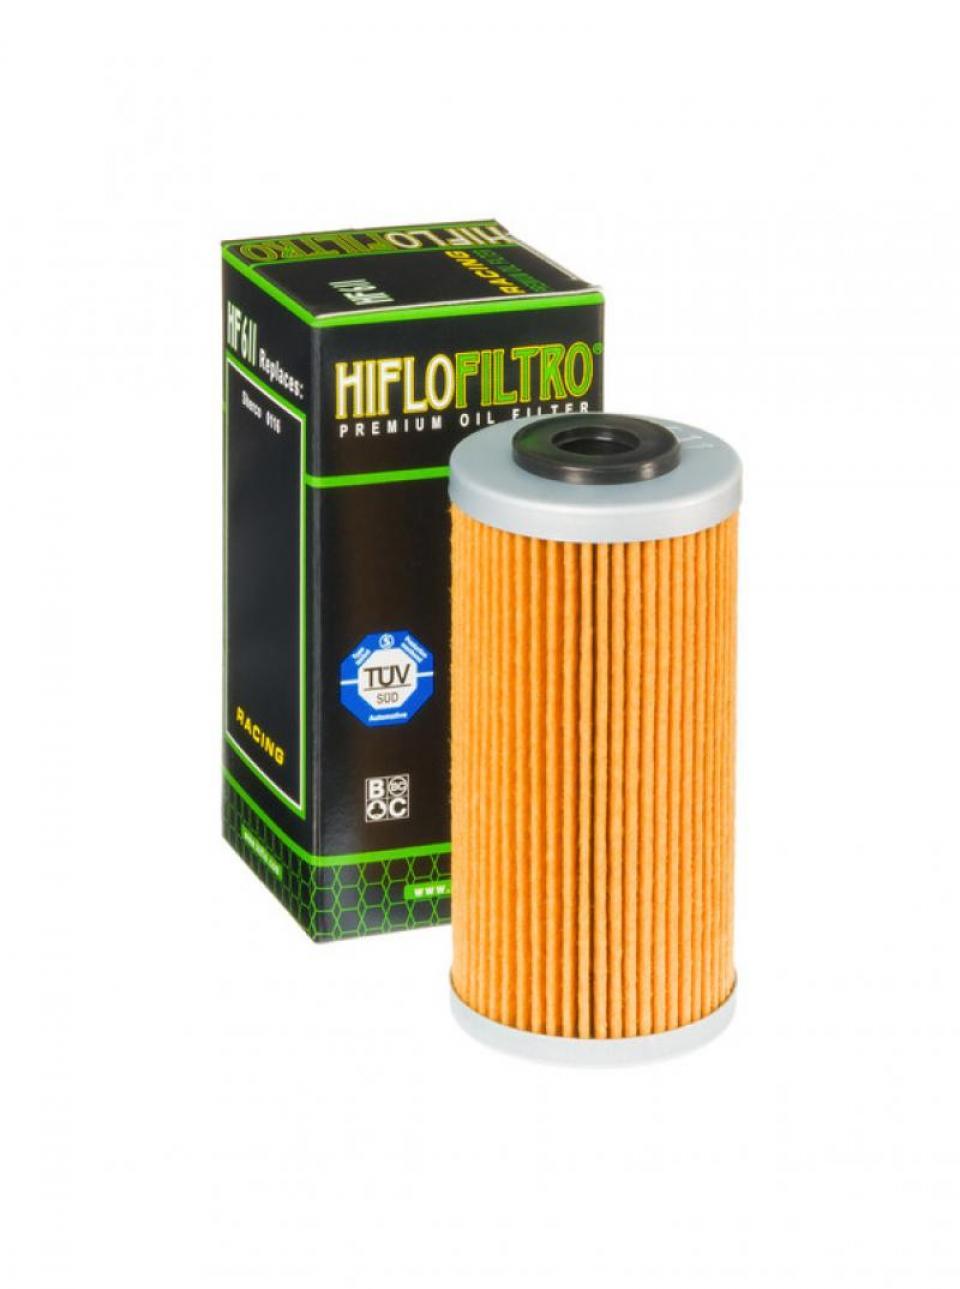 Filtre à huile Hiflo Filtro pour Moto SHERCO 300 Se I F 4T Enduro 2012-2012 Neuf